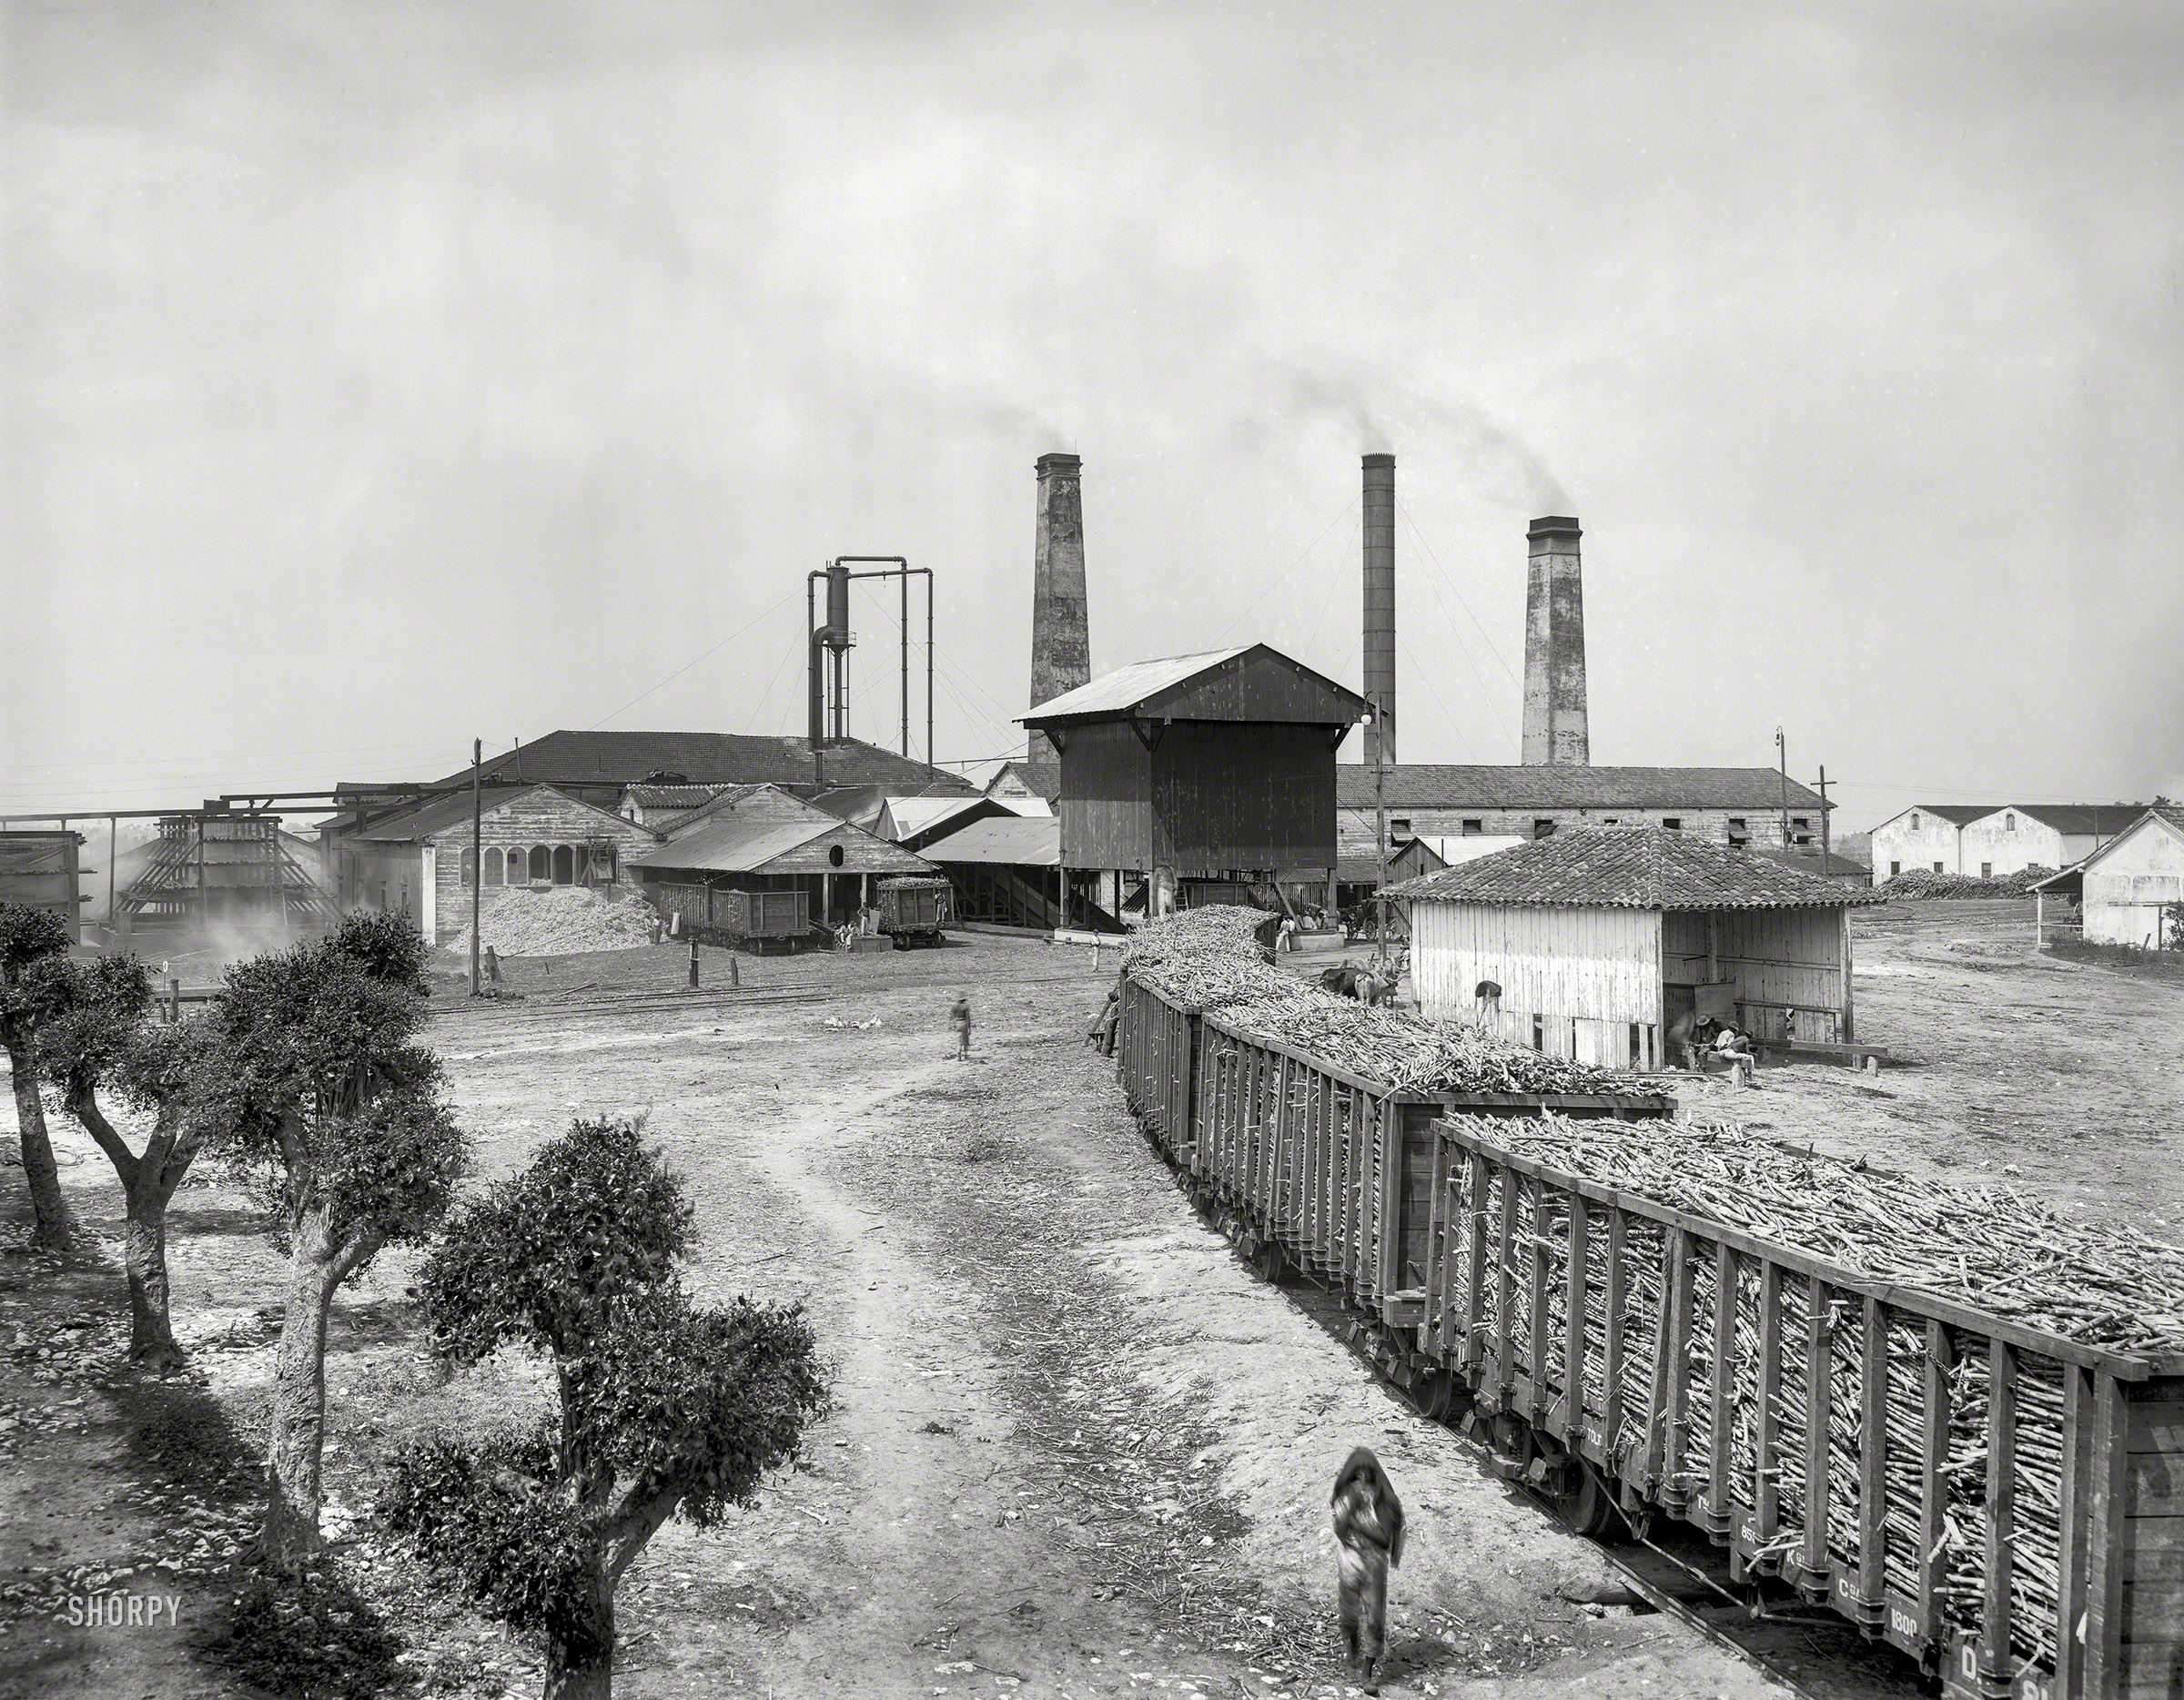 Cuba circa 1904. "The old sugar mill at Finca near Havana." 8x10 inch dry plate glass negative, Detroit Publishing Company. View full size.